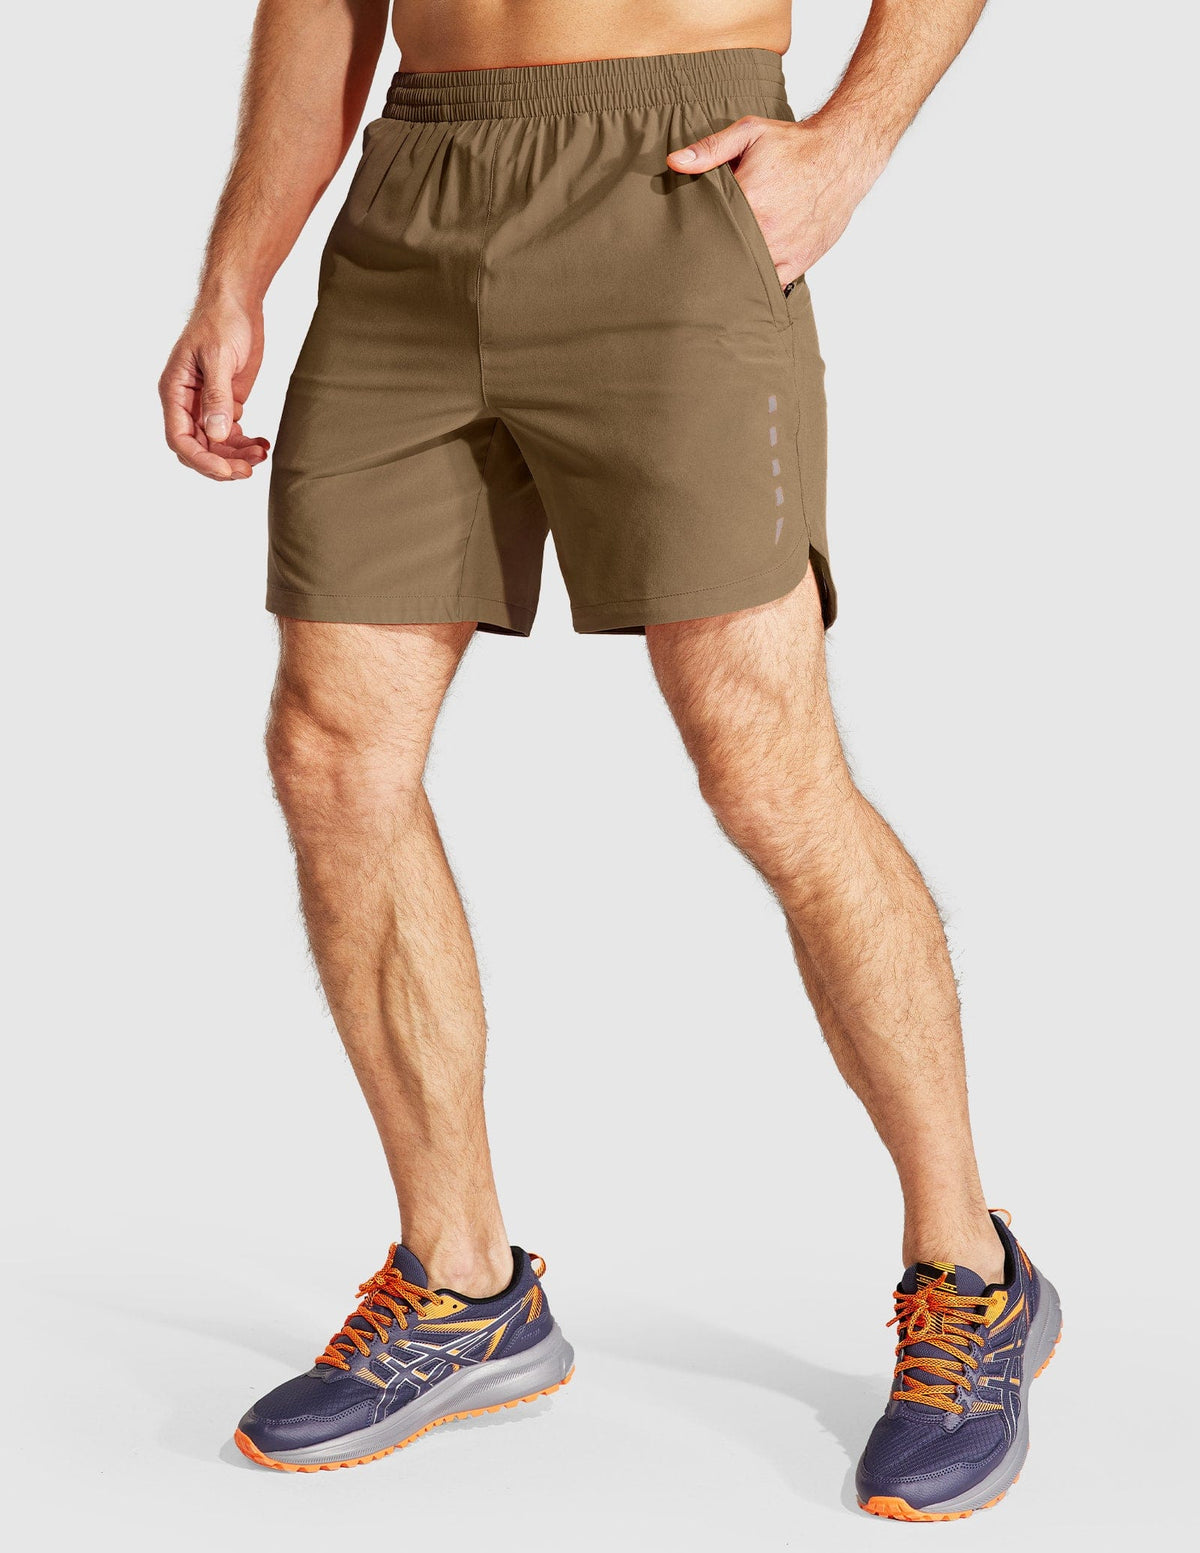 Men's 7 Inch Running Shorts Quick Dry with Zipper Pockets Men's Shorts Khaki / S MIER